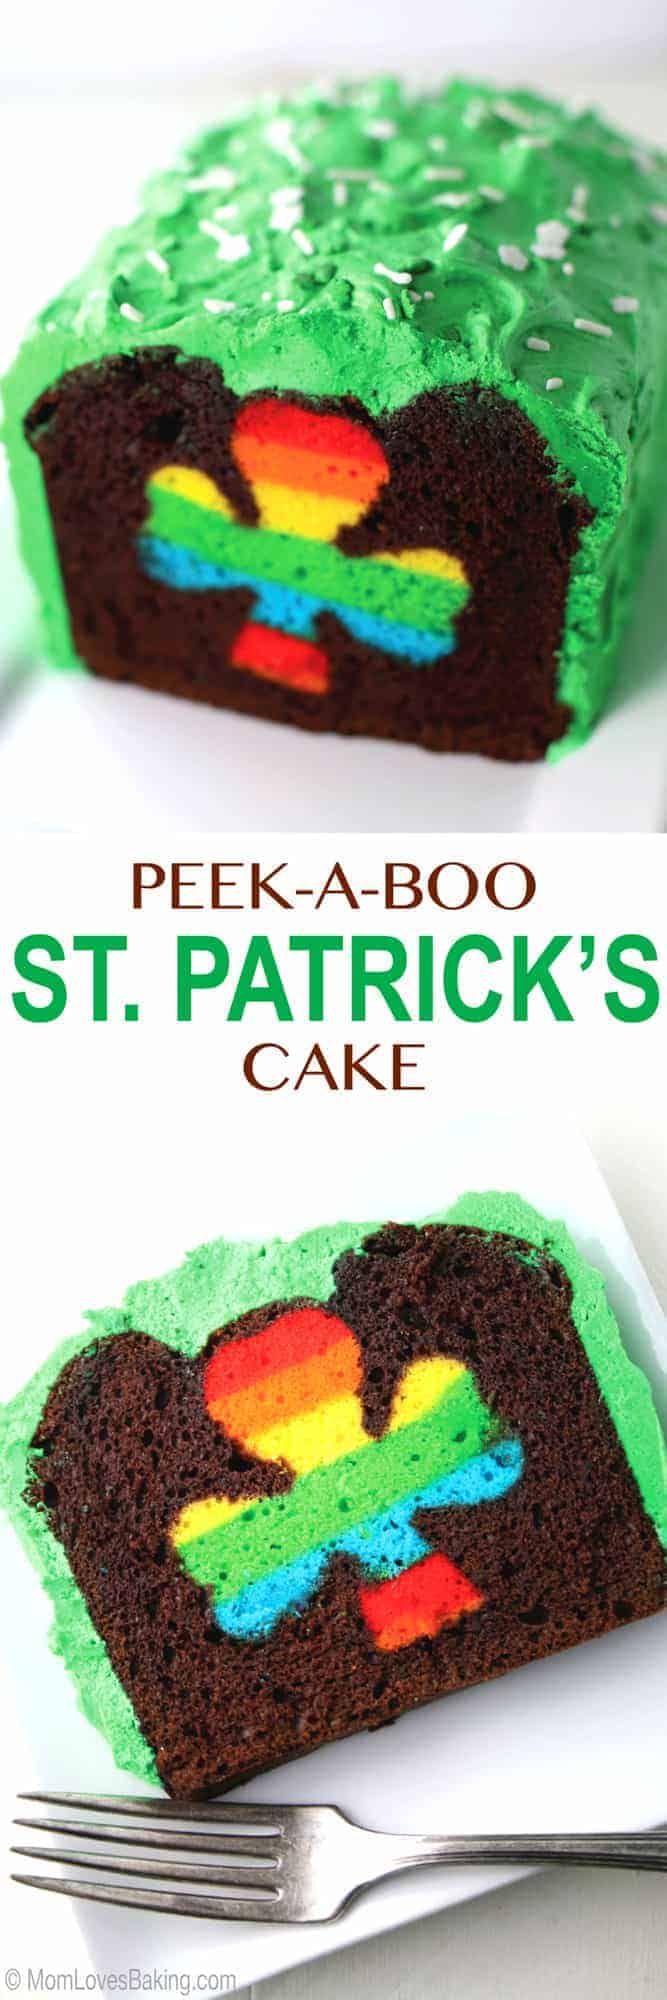 Peek-a-boo St. Patrick's Day Cake